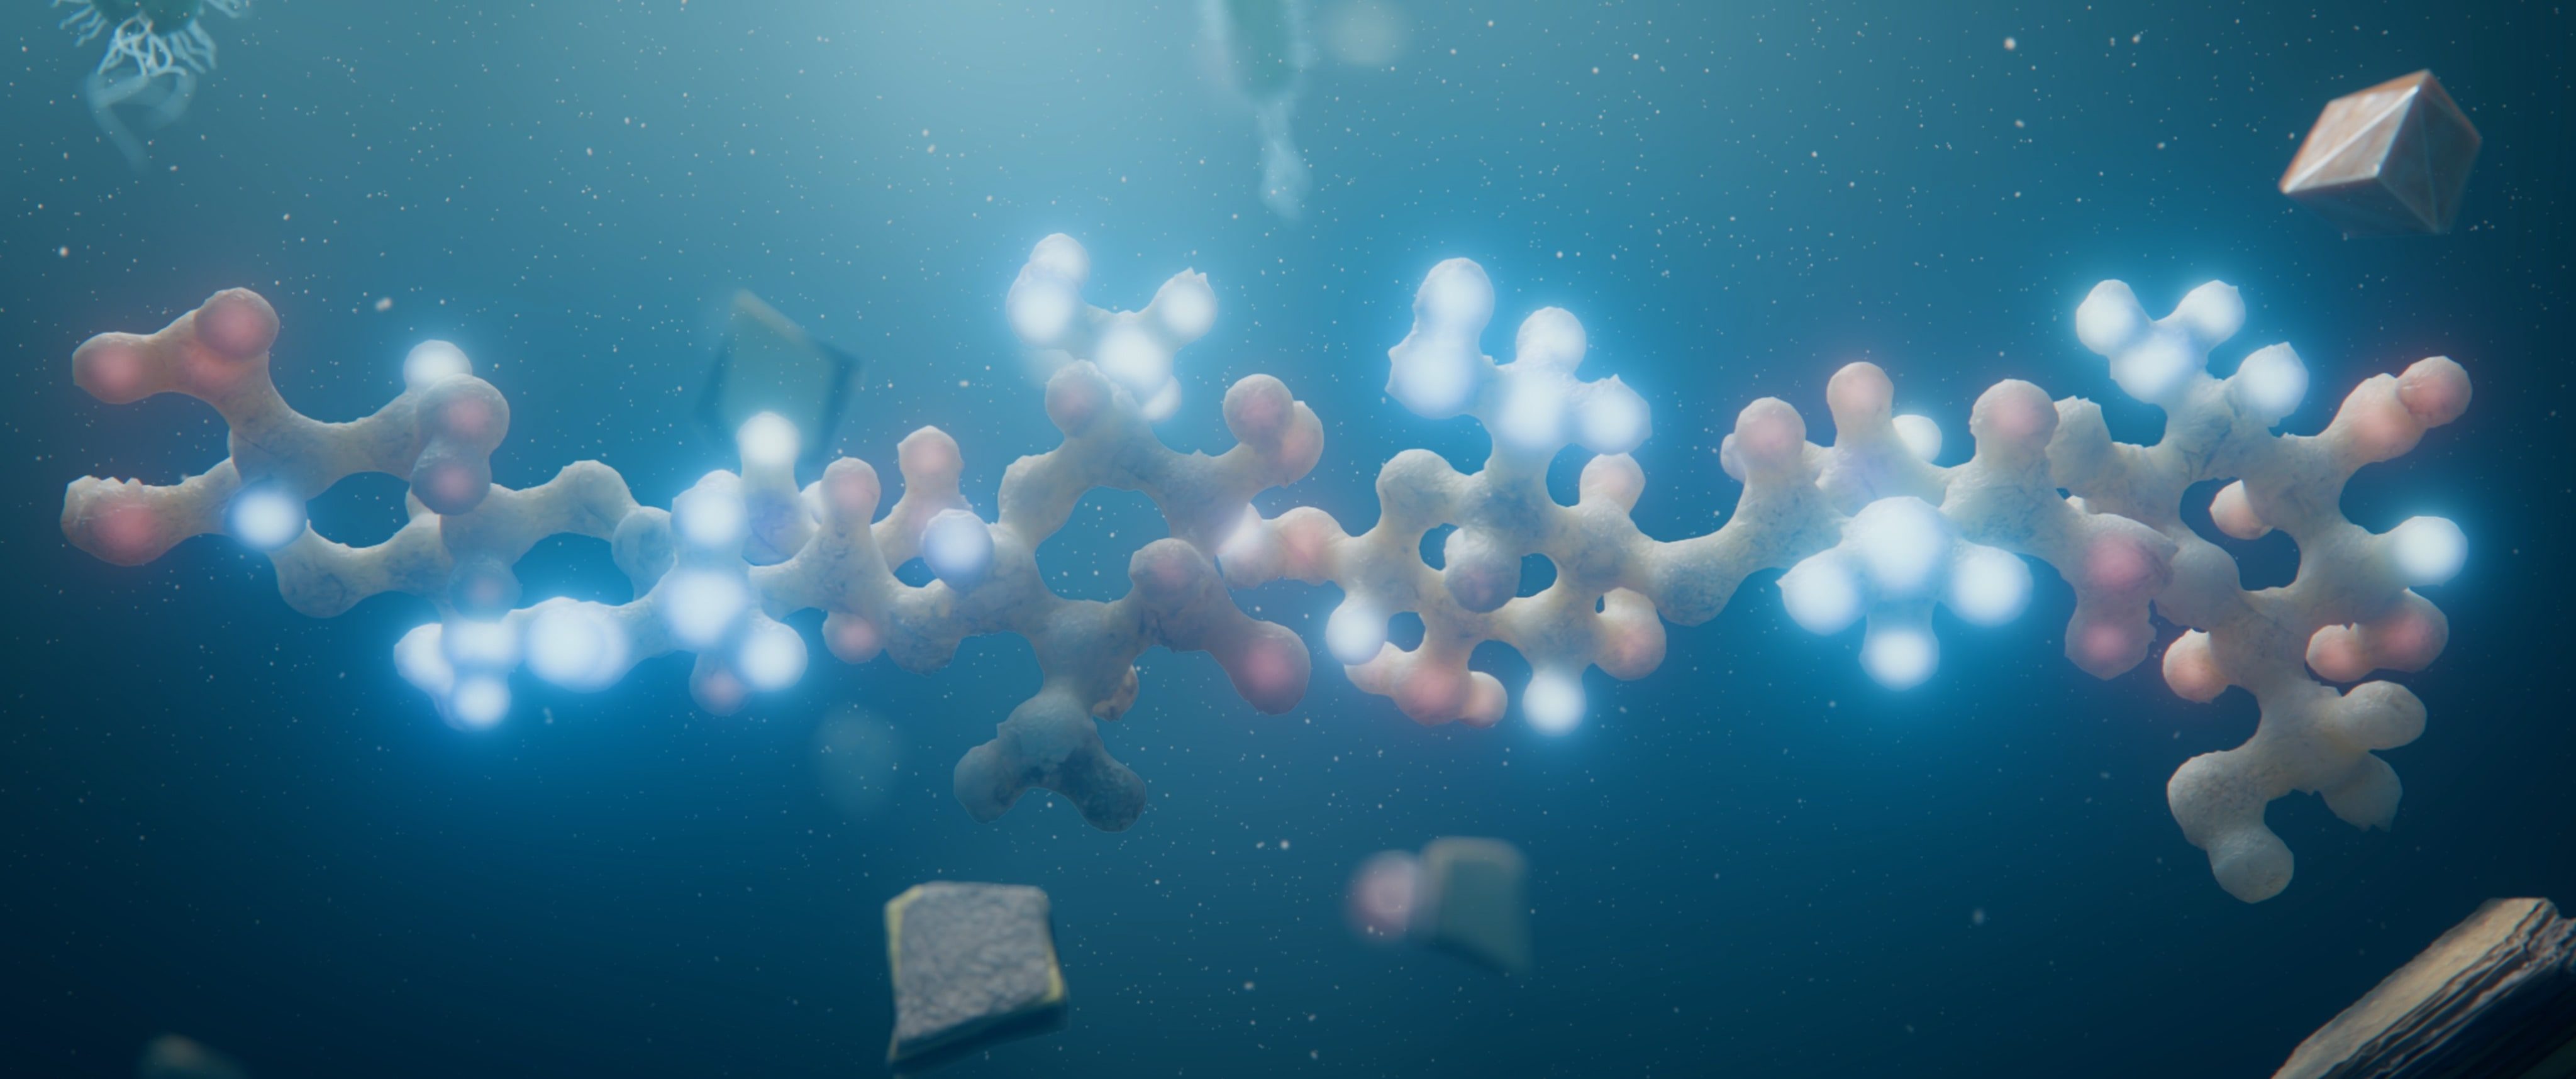 Tidal Vision Chitosan Molecule Underwater Glow